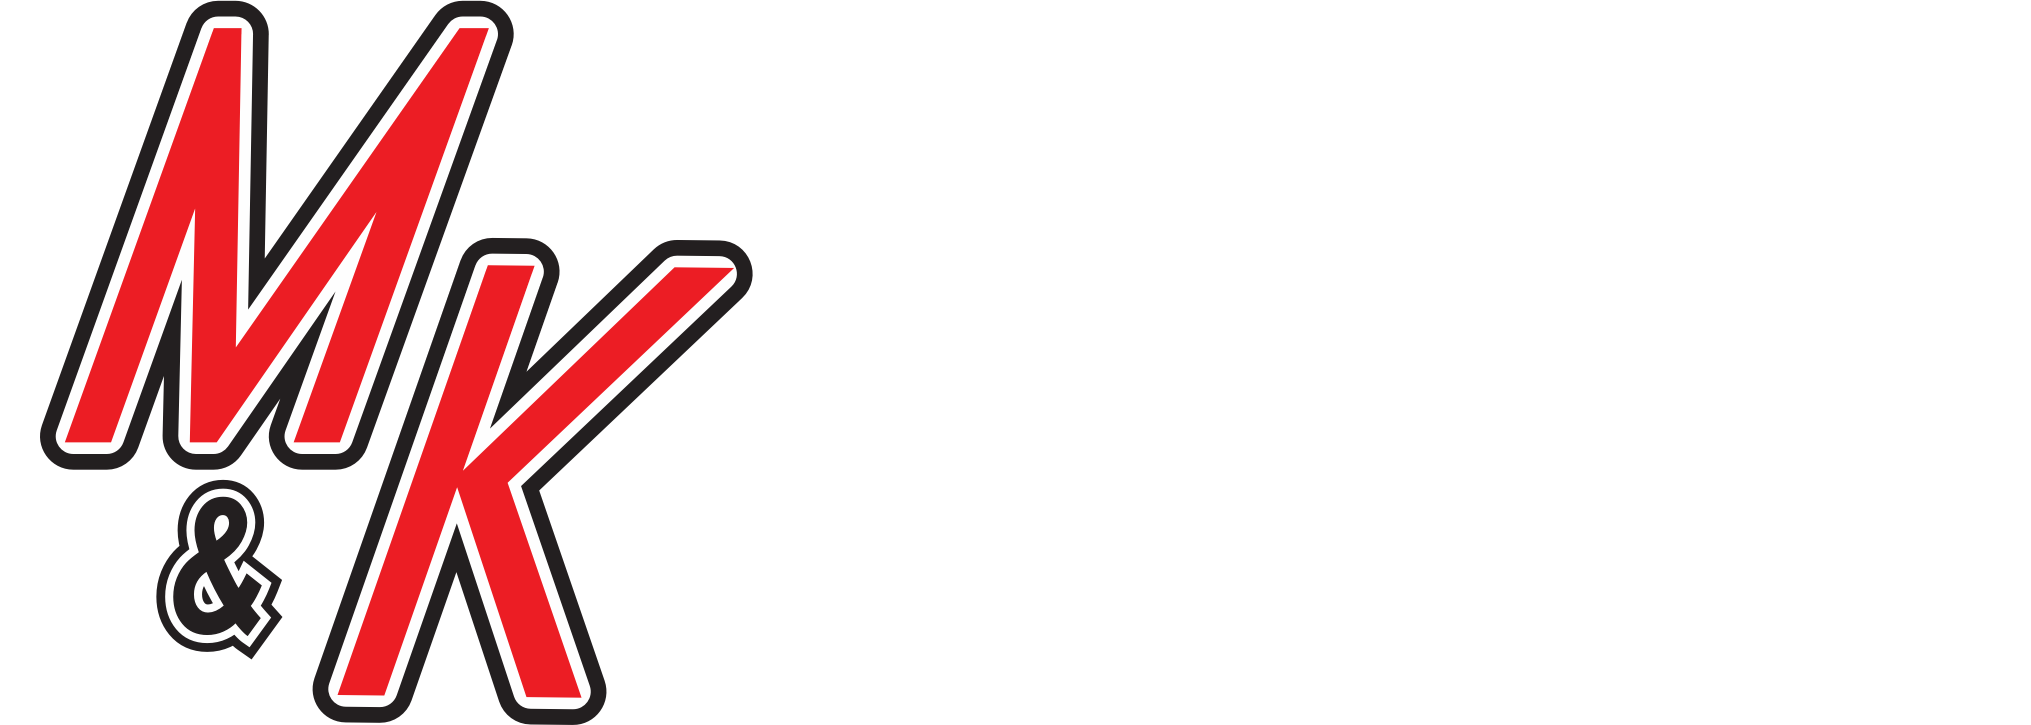 Wyocarb Tool & Equipment Rental